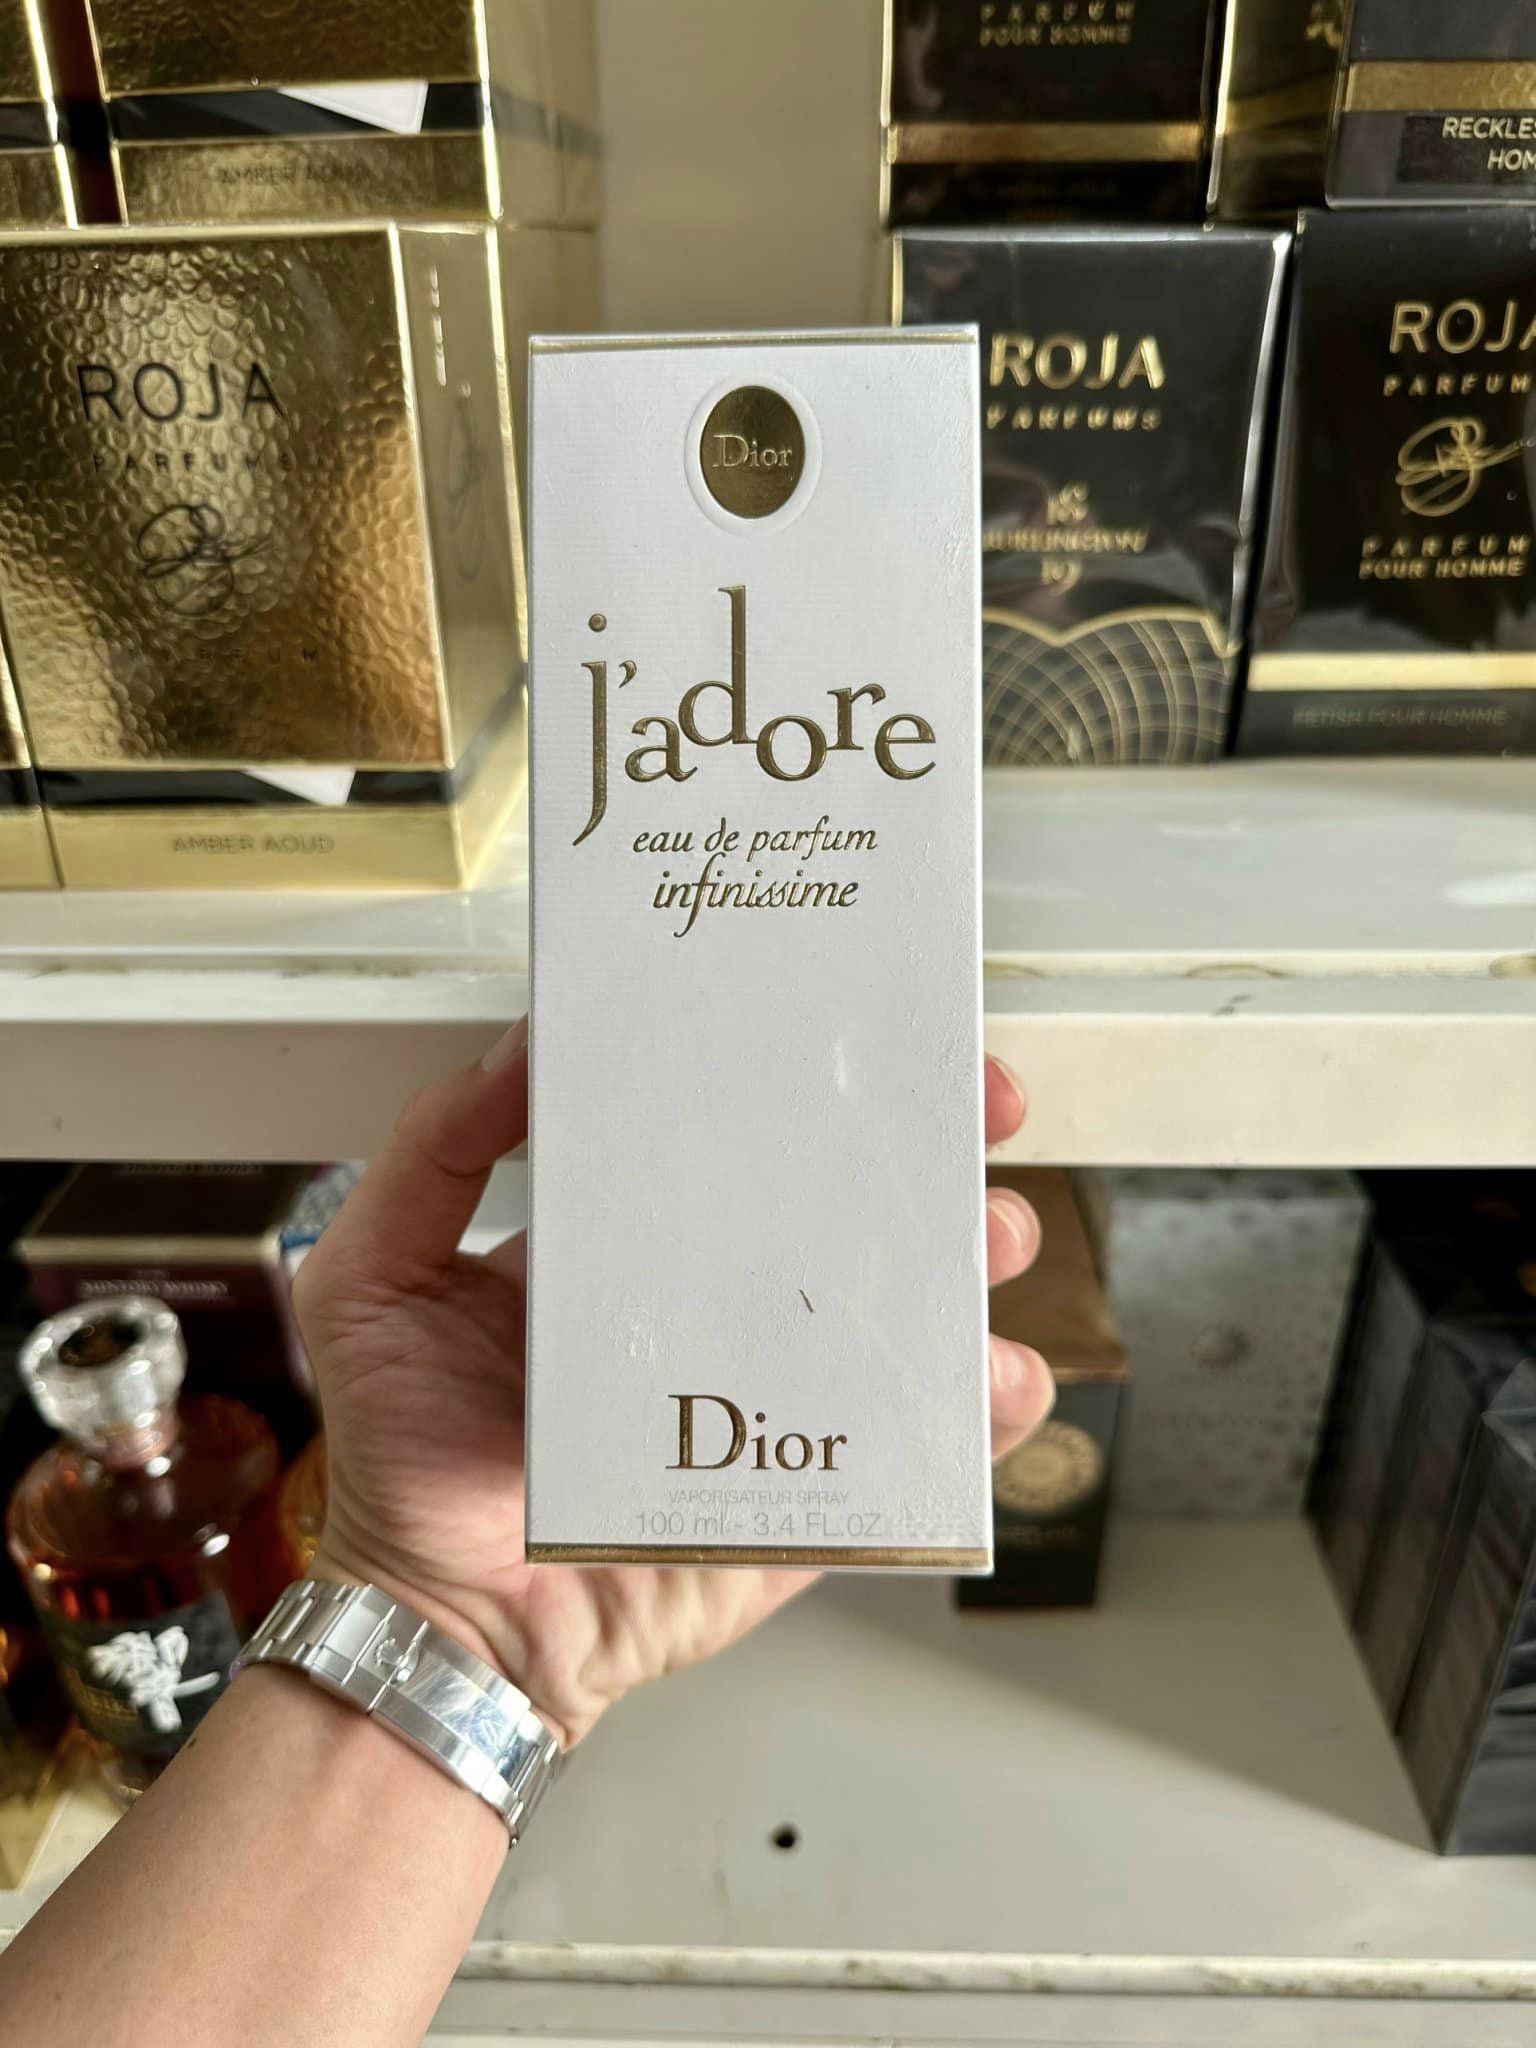 Dior Xmas Jadore Eau De Parfum Infinissime 50ml Set  David Jones